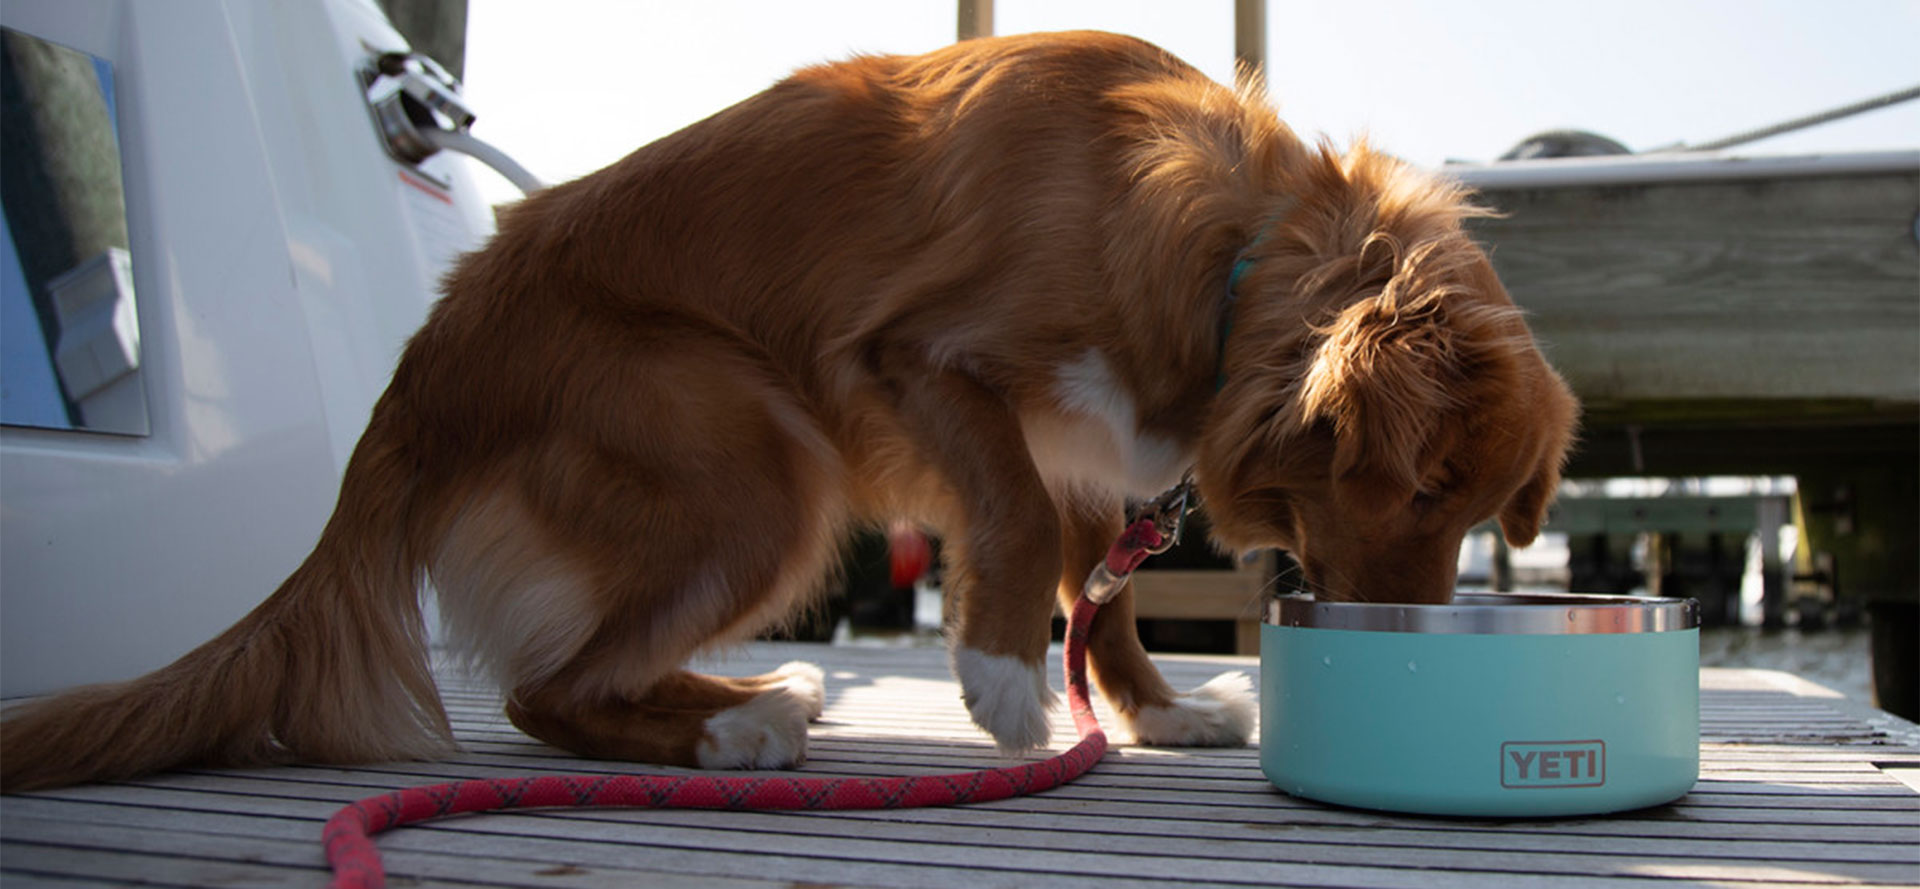 Dog eats from dog bowl.